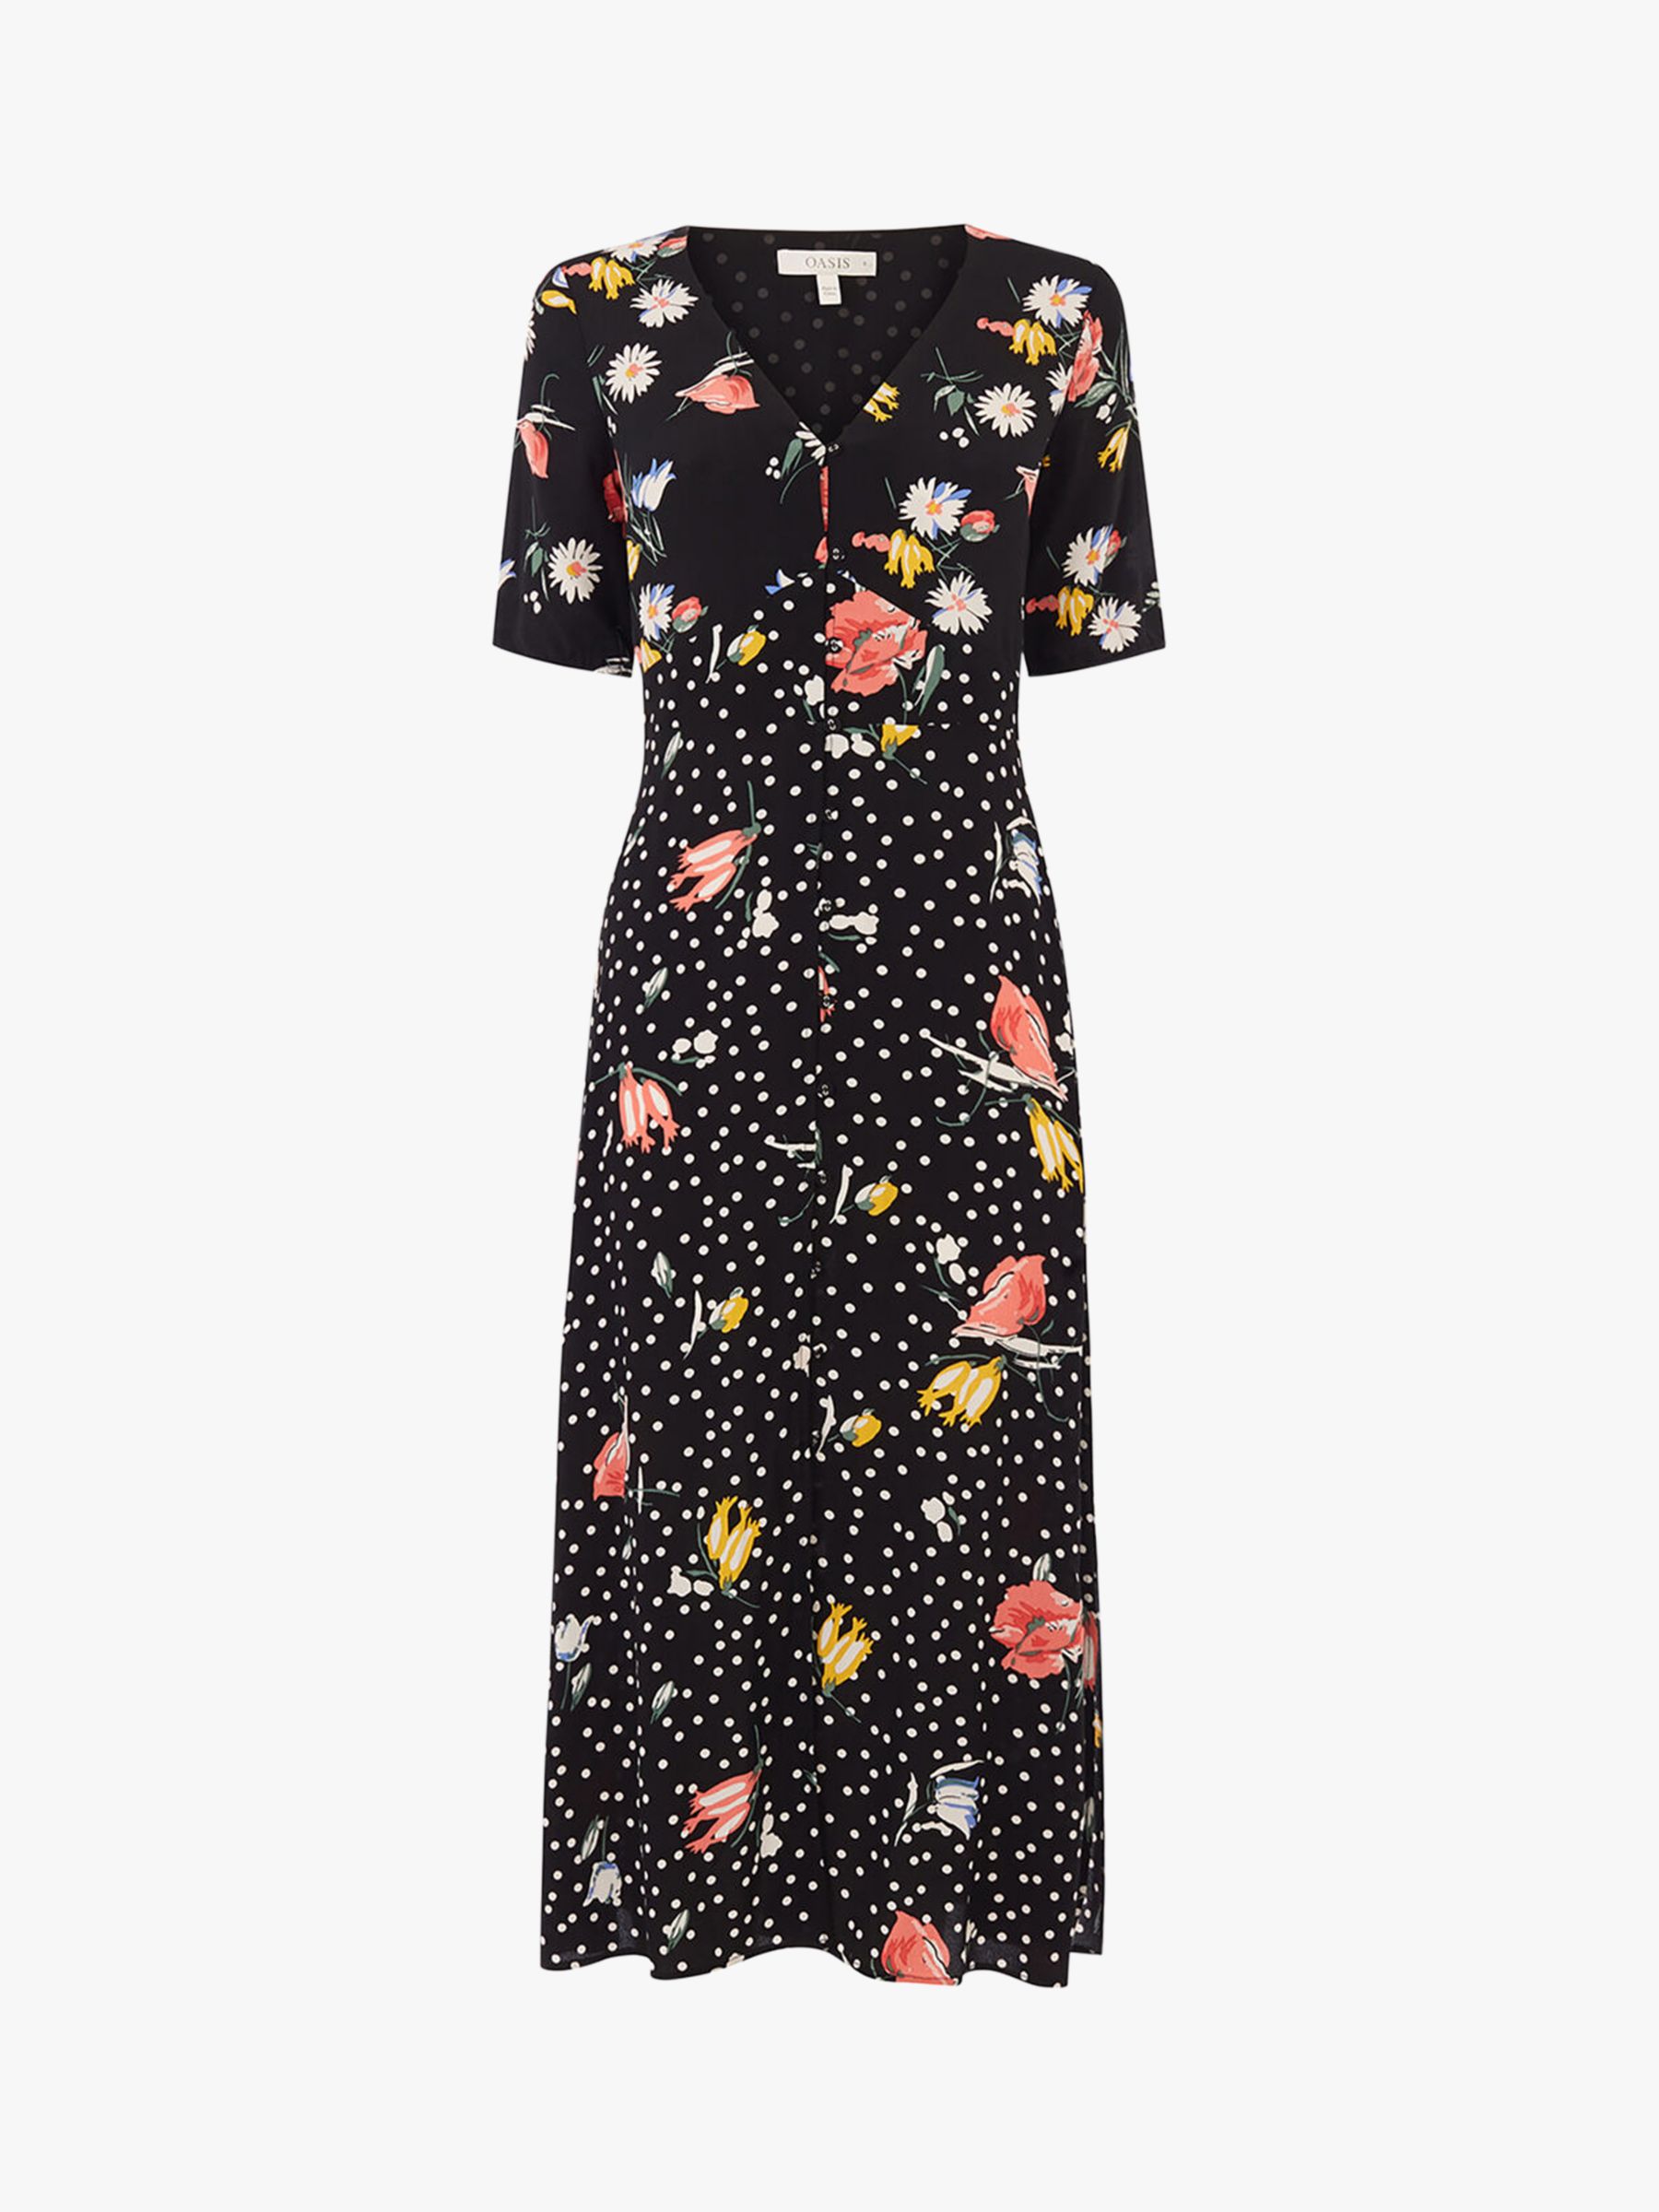 Oasis Patch Floral Print Midi Dress, Black/Multi, 6R